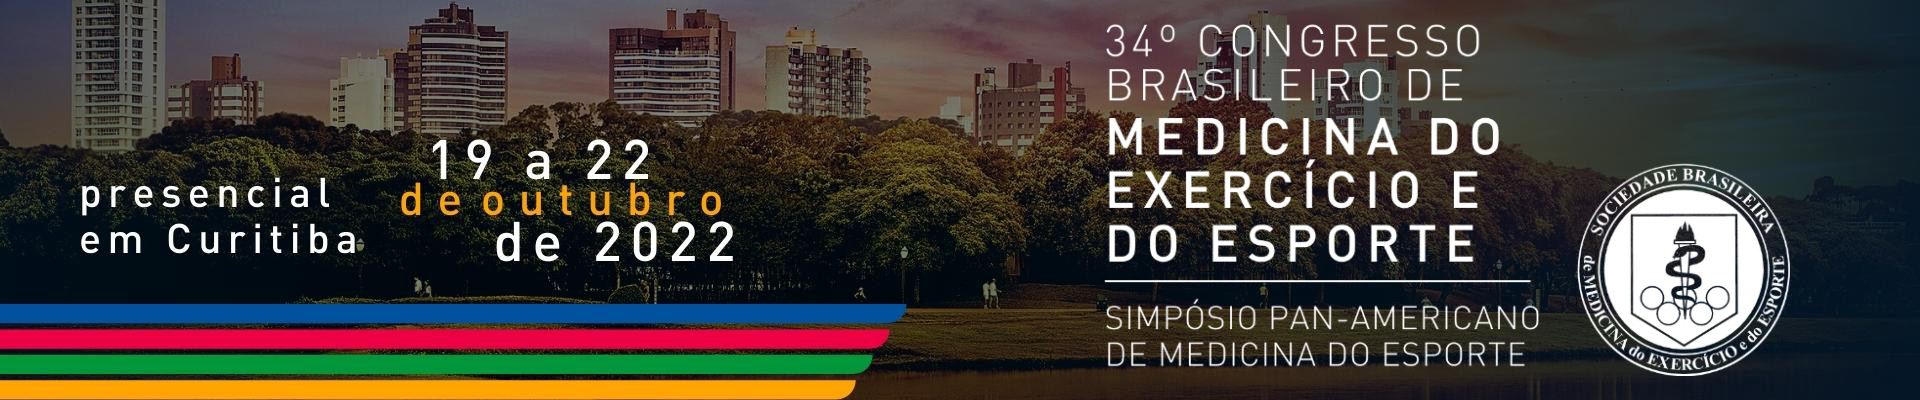 34º Congresso Brasileiro de Medicina do Exercício e do Esporte e Simpósio Pan-Americano de Medicina do Esporte